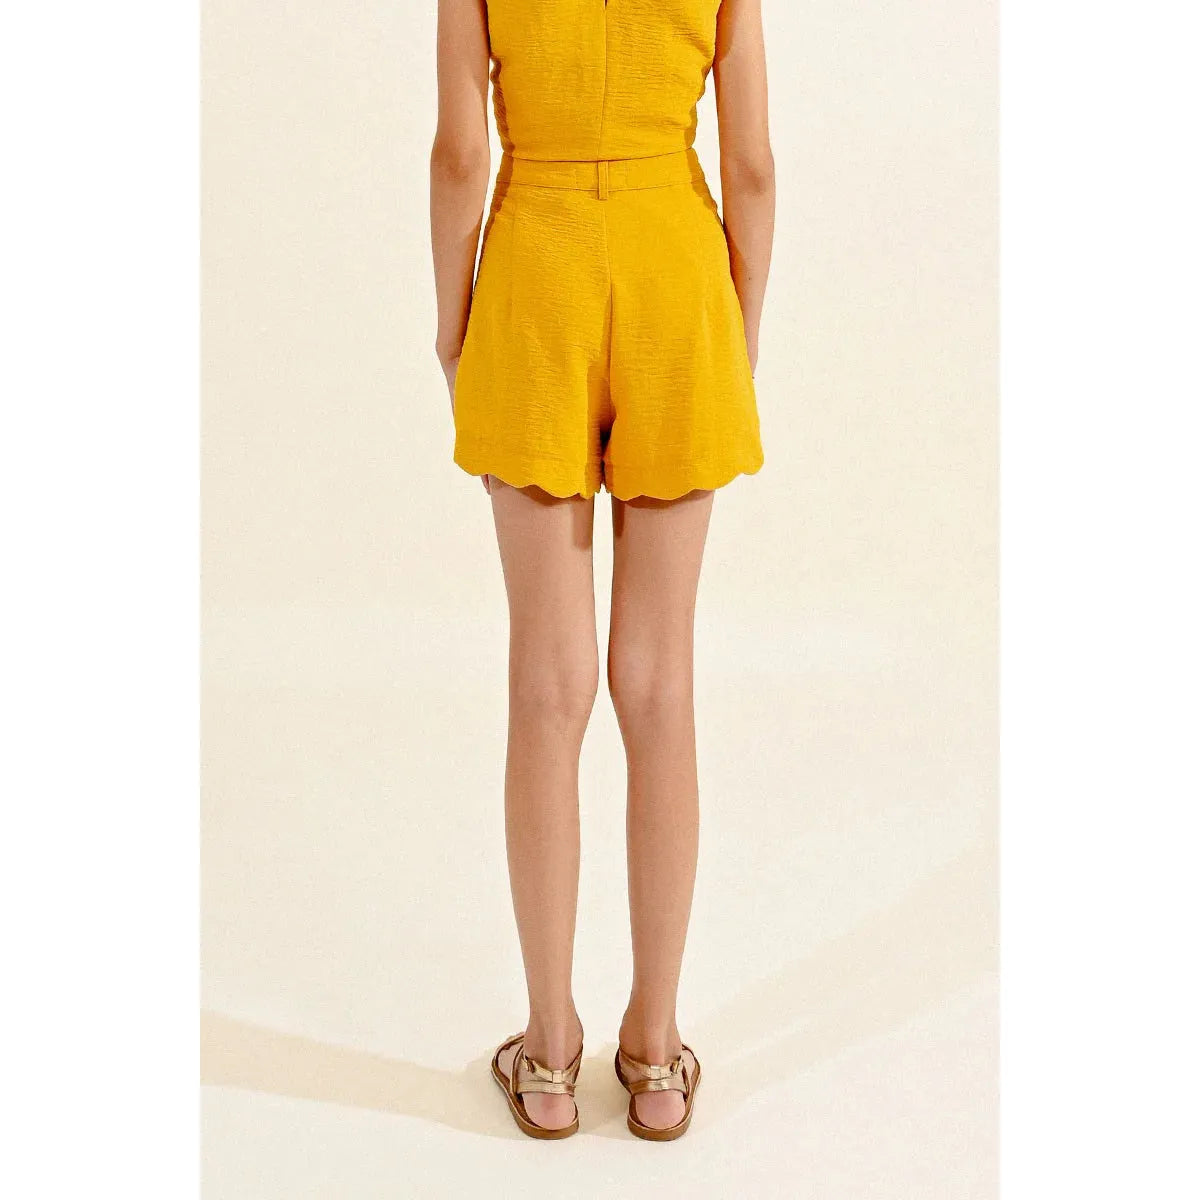 Molly Bracken - Shorts in Yellow Mango